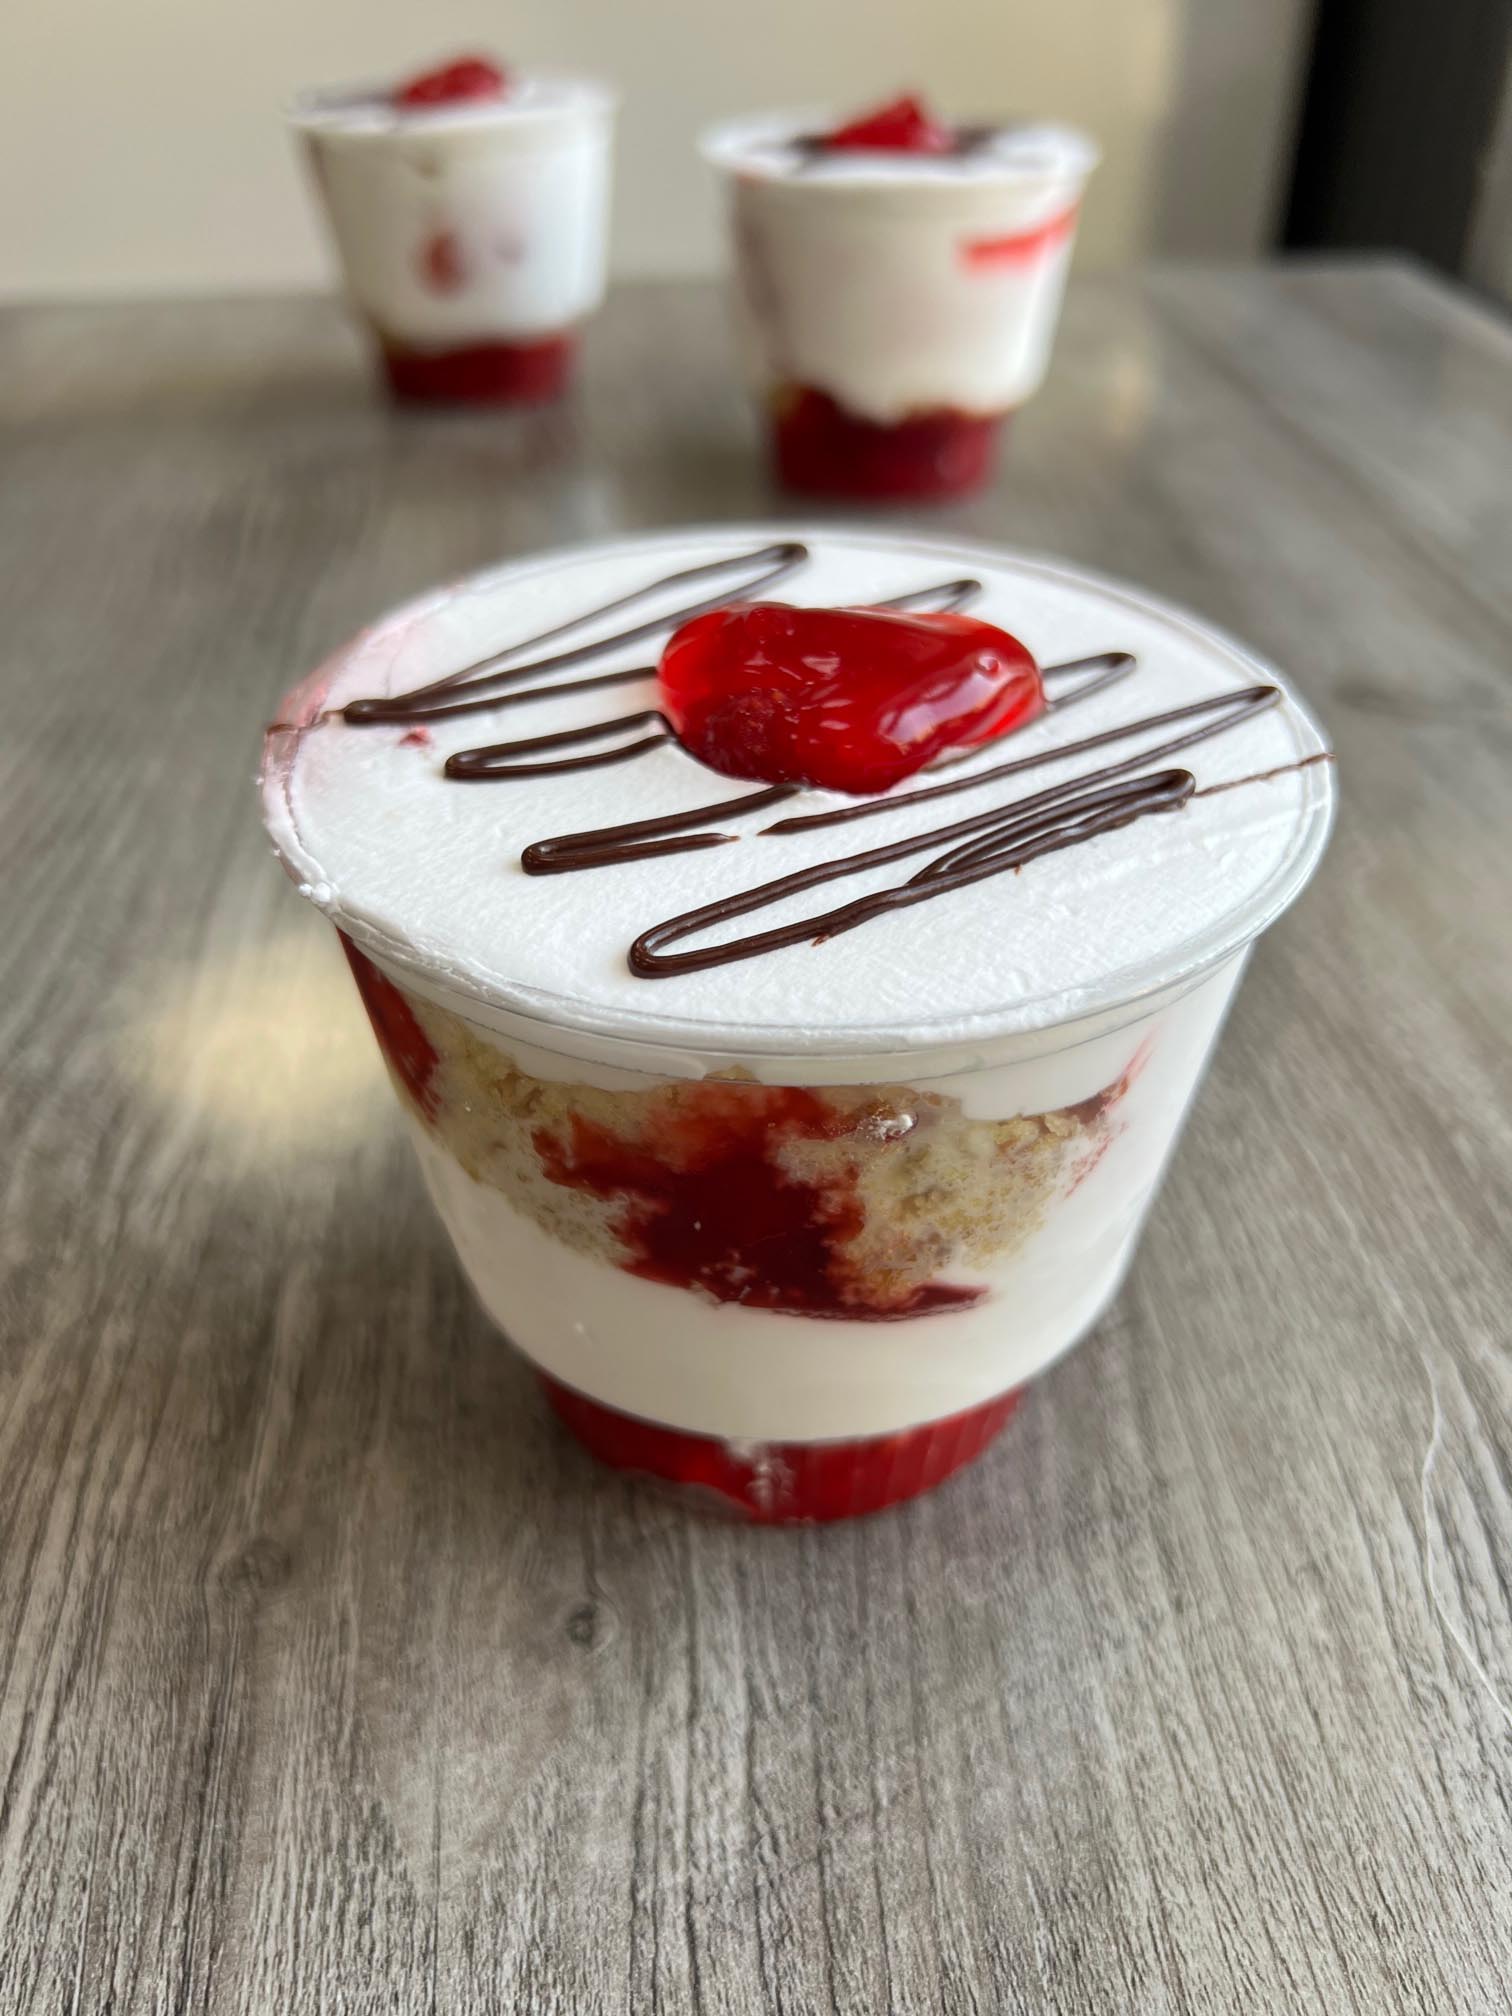 Strawberry Shortcake Dessert Cups - 3 - 12 oz